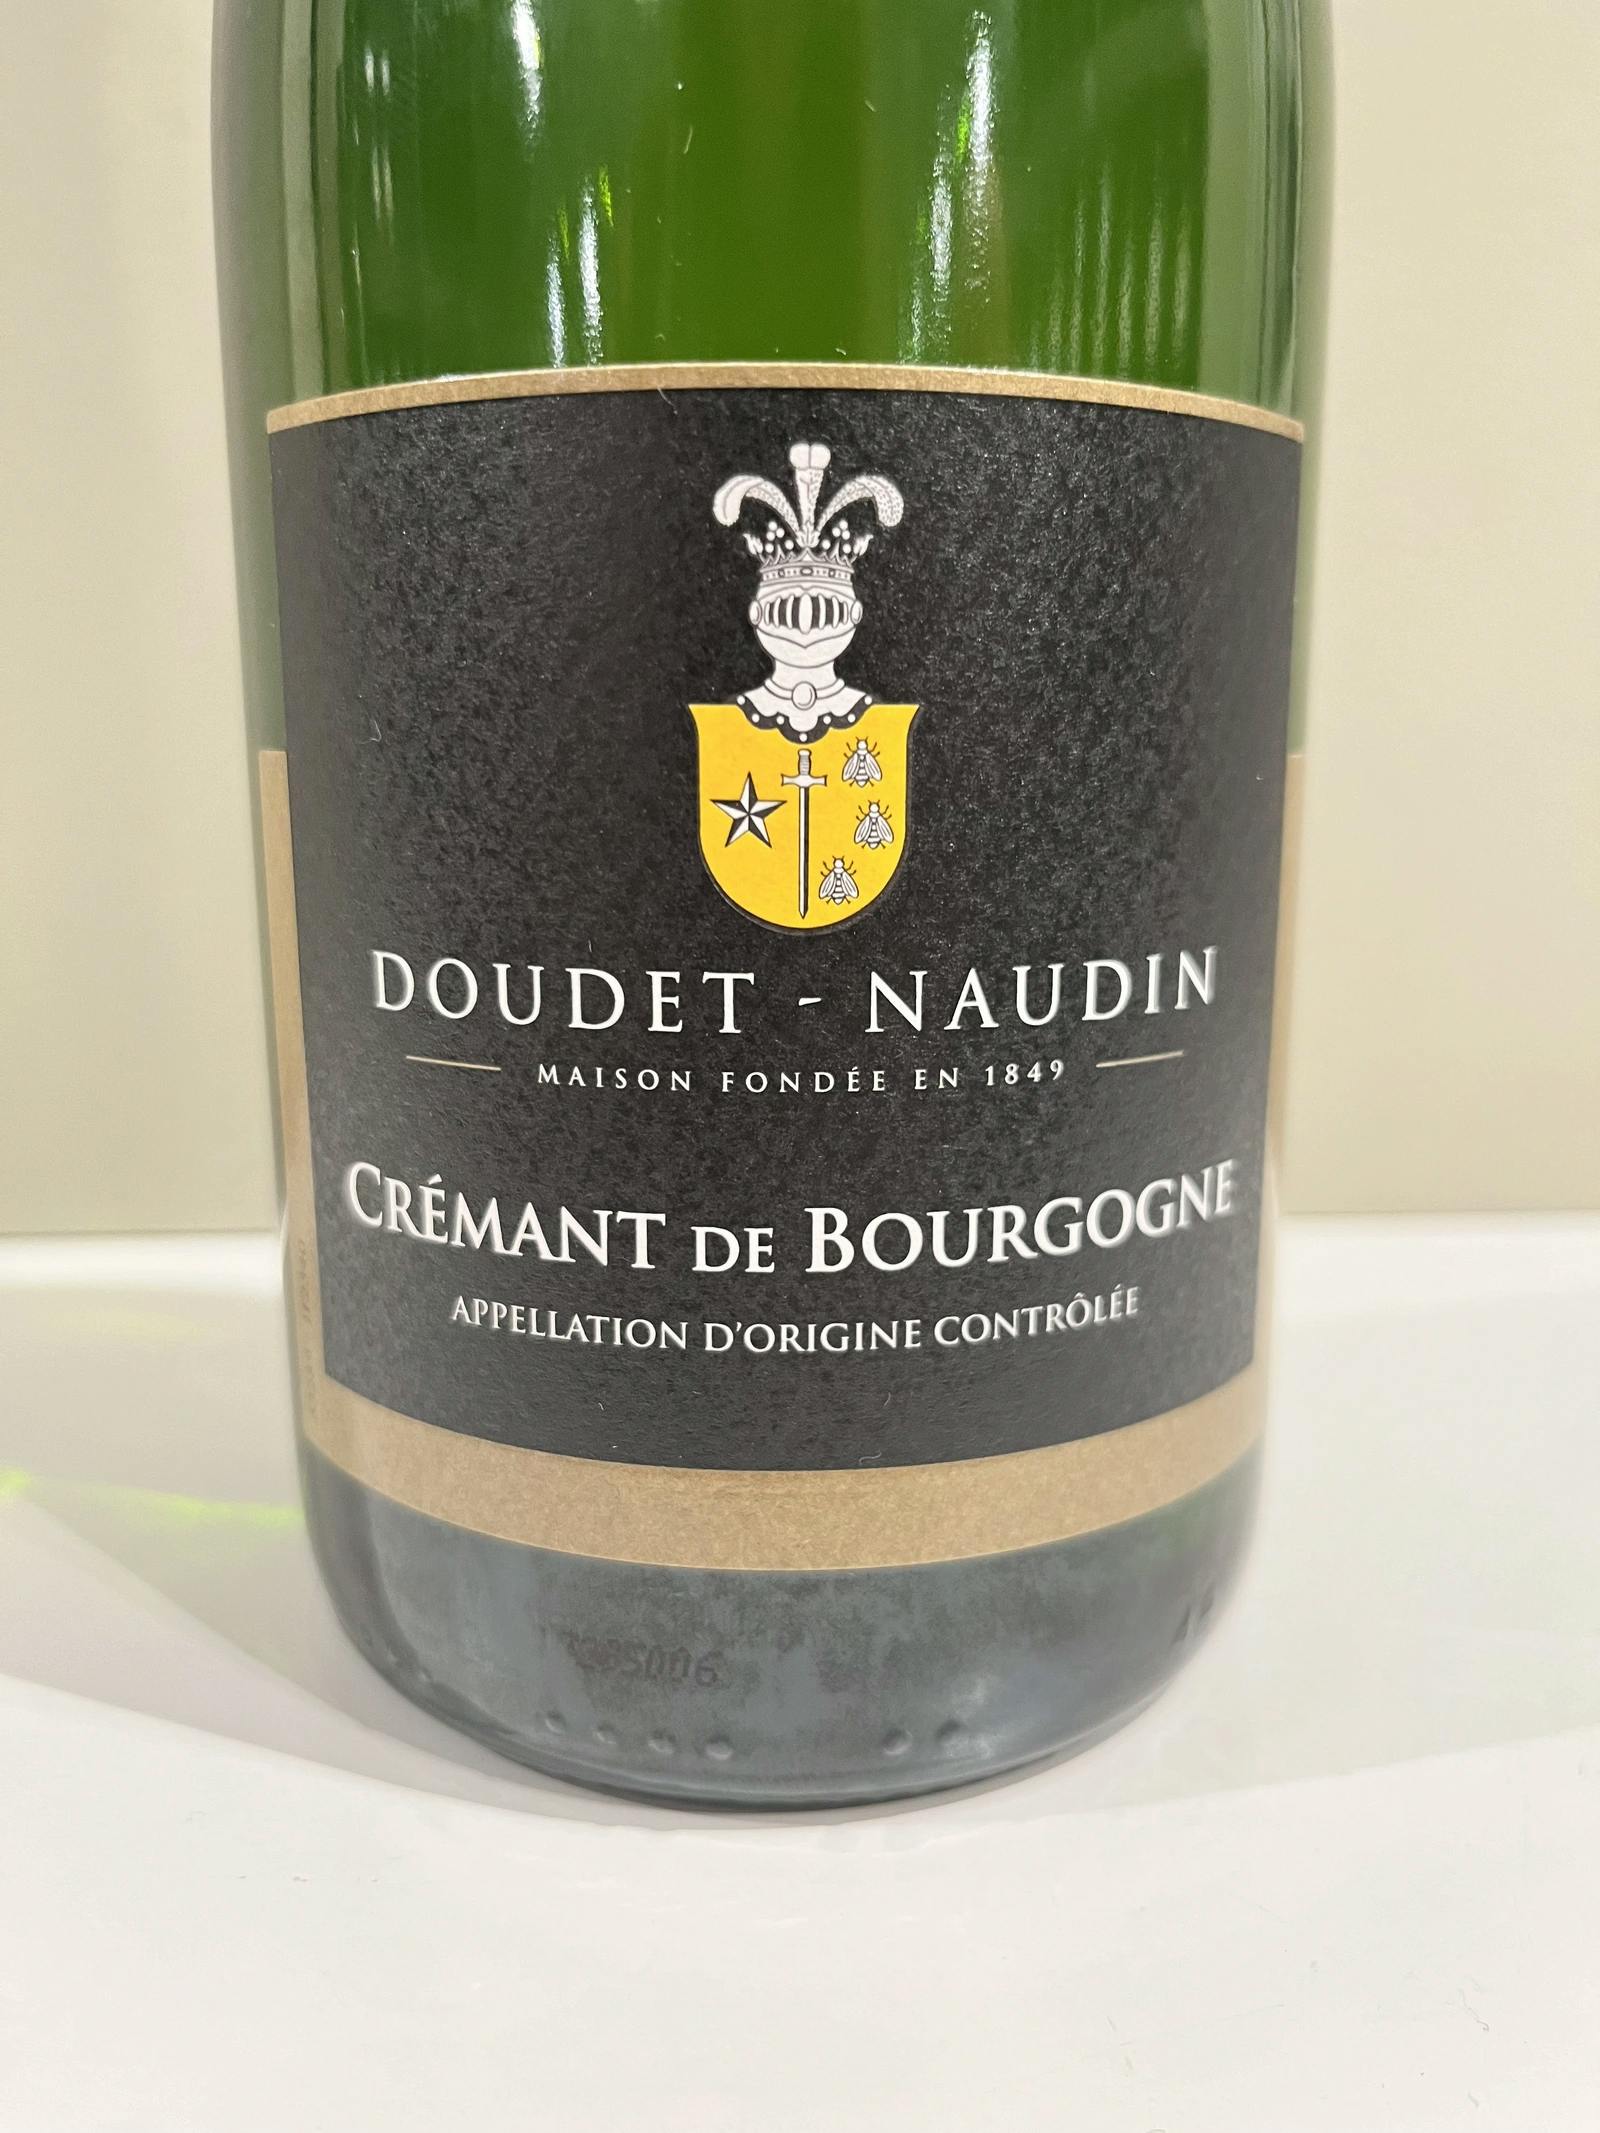 Doudet Naudin Crémant de Bourgogne NV